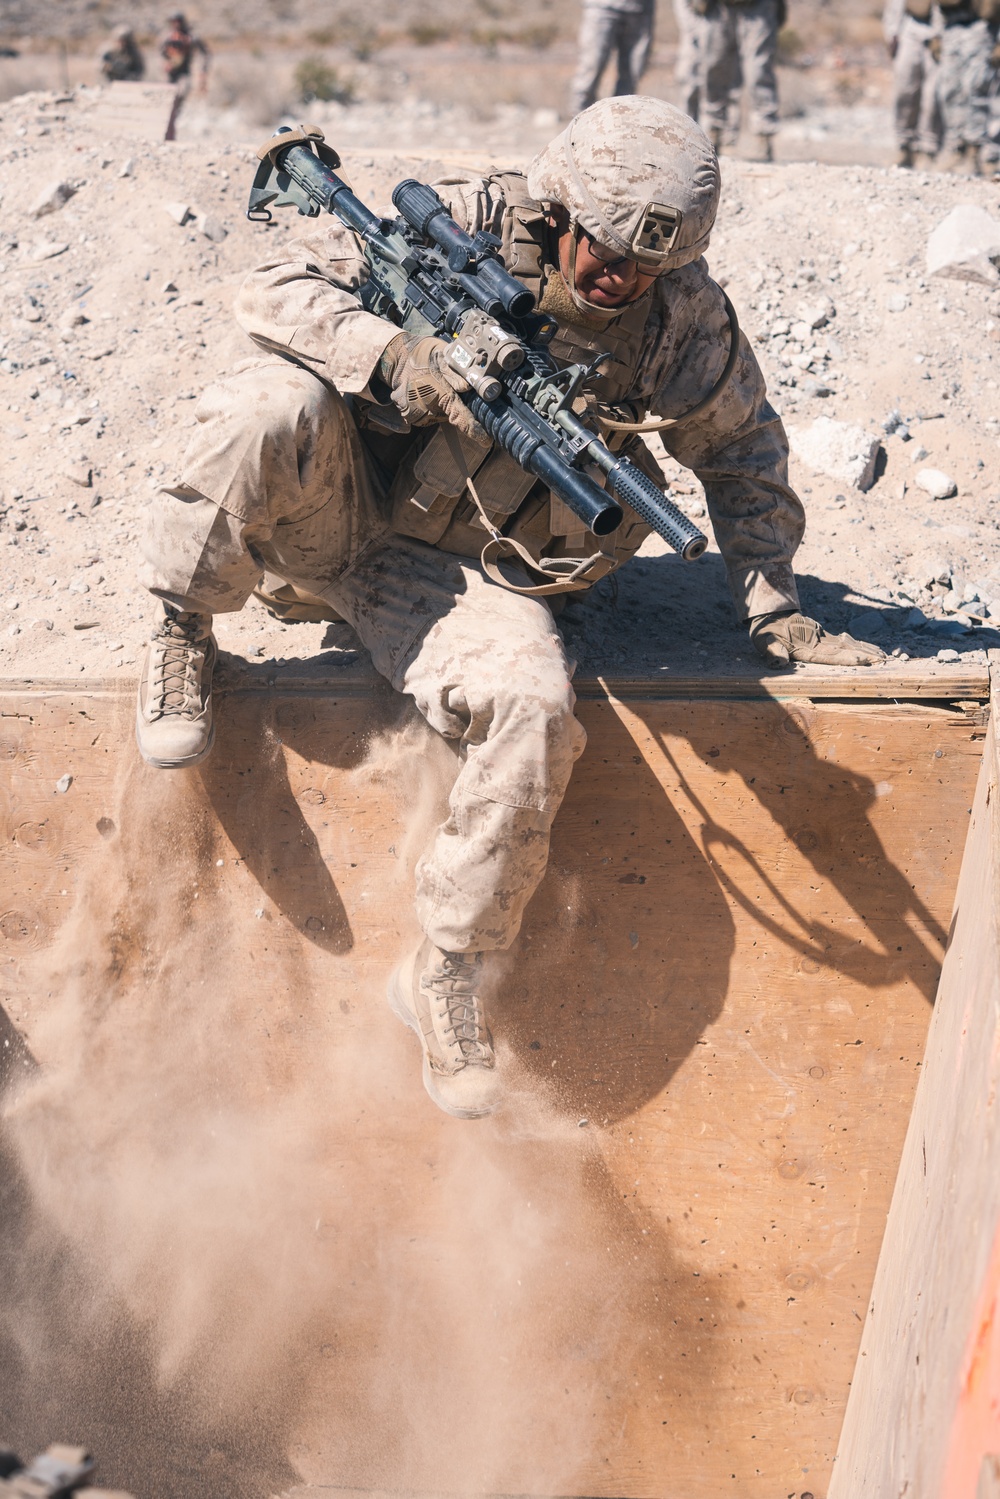 Marines use maneuver warfare while conducting live fire range